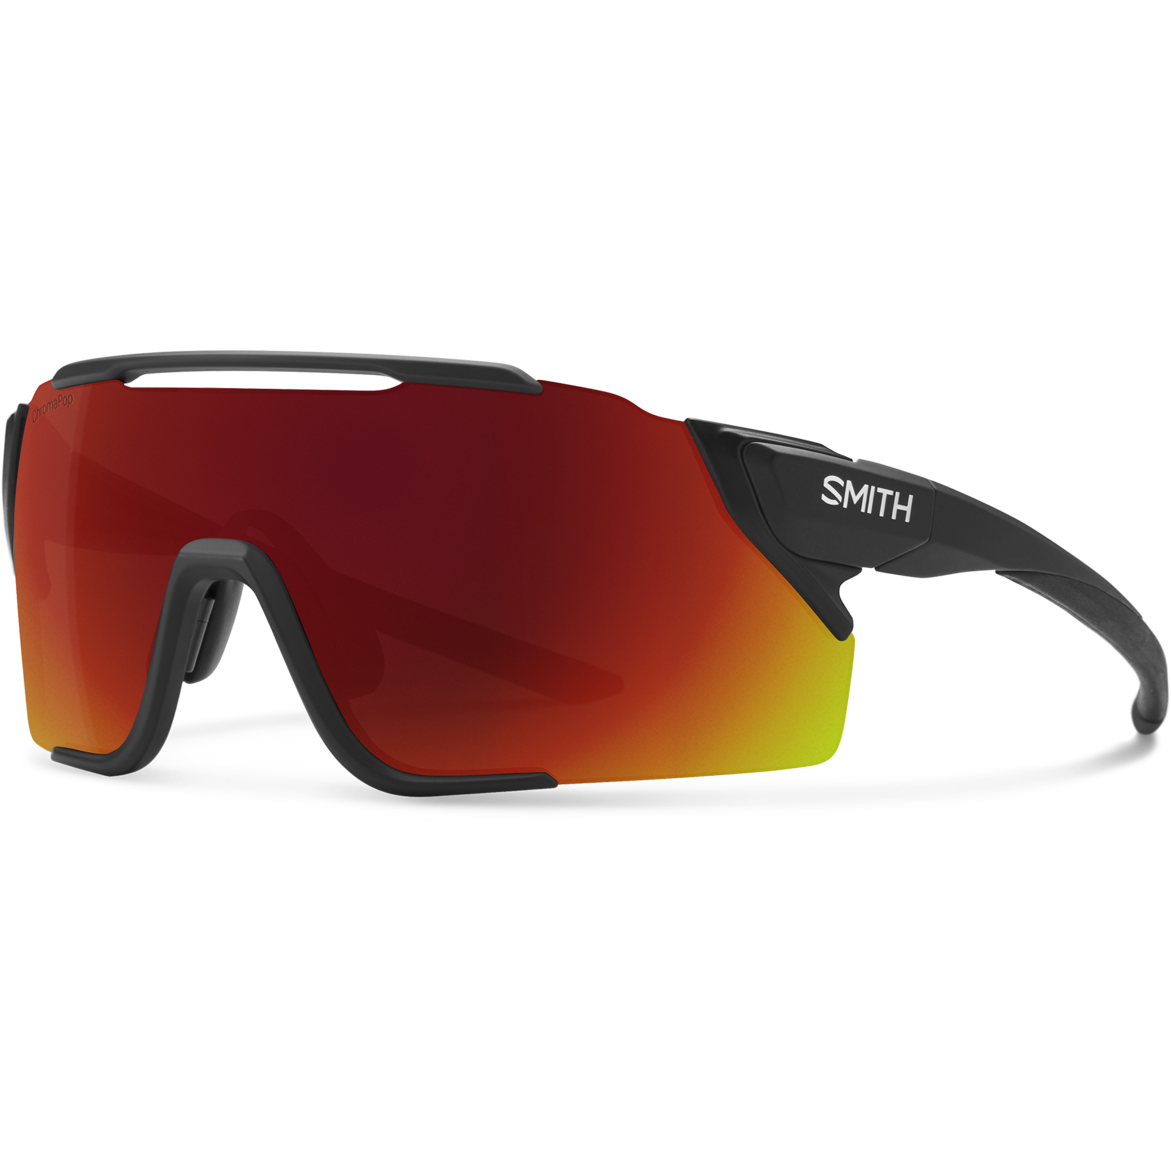 Smith Optics Attack MAG MTB Sunglasses